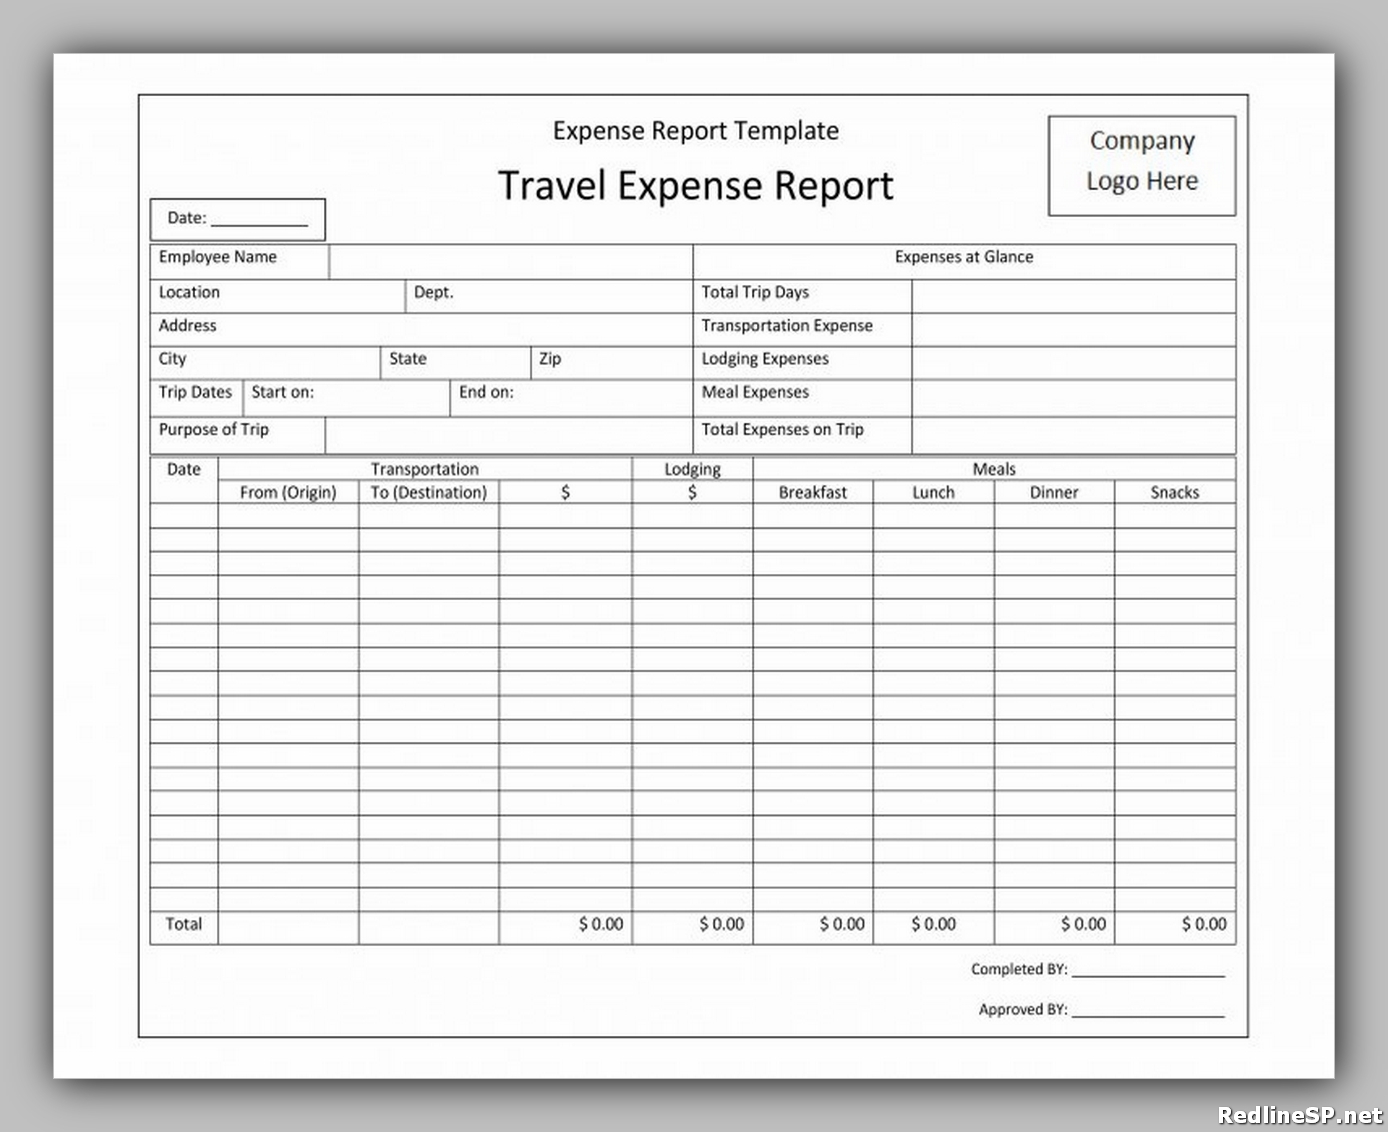 travel expenses report